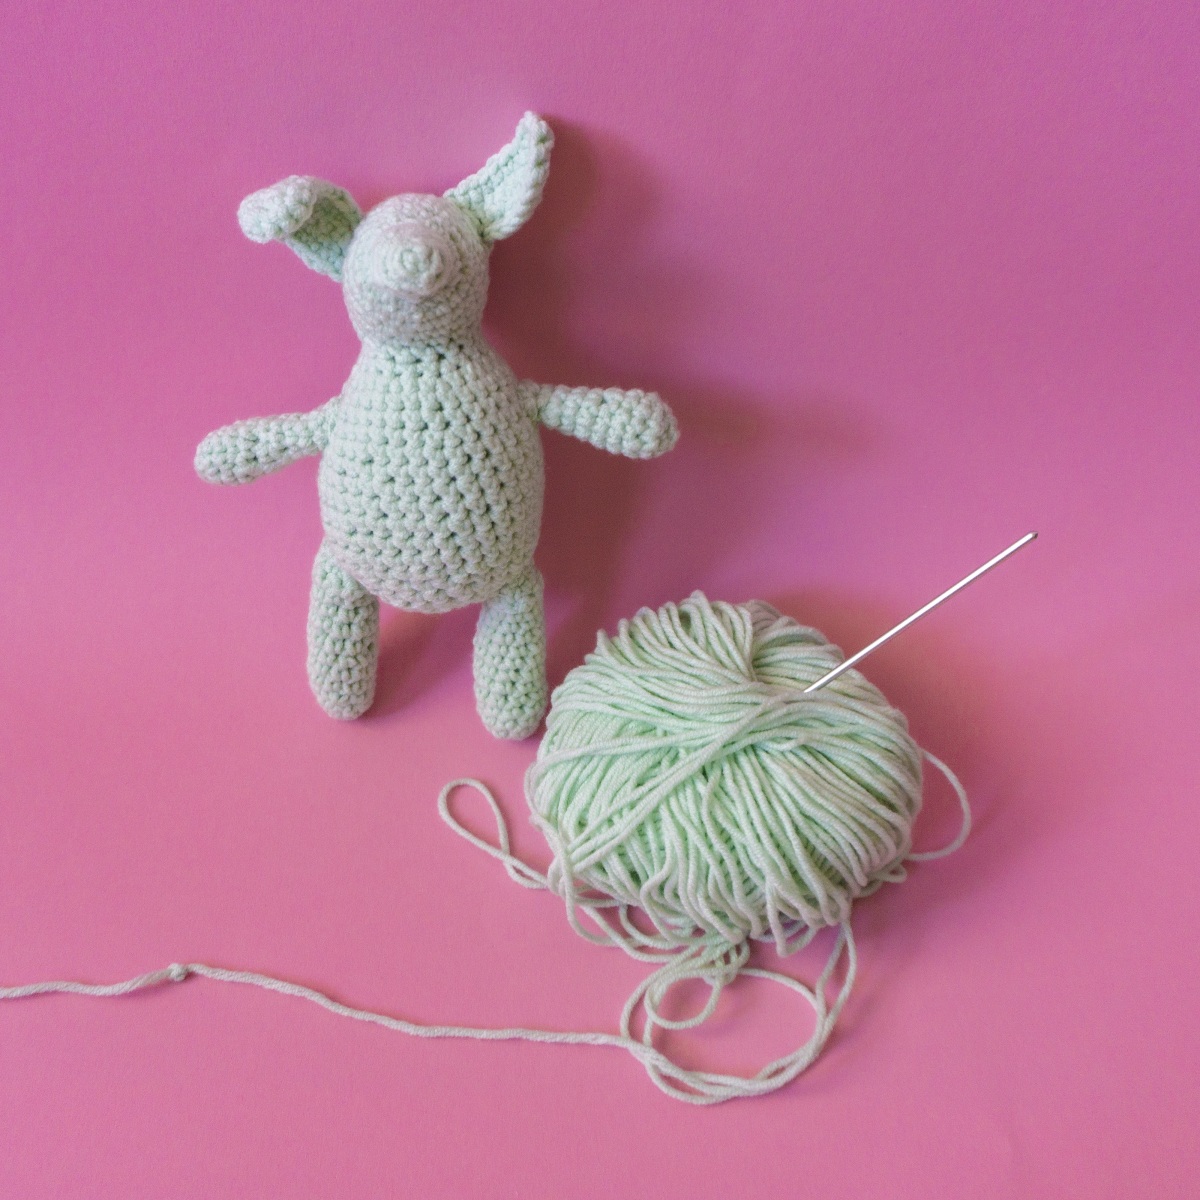 Easy and cute amigurumi Japanese book stuffed knitting